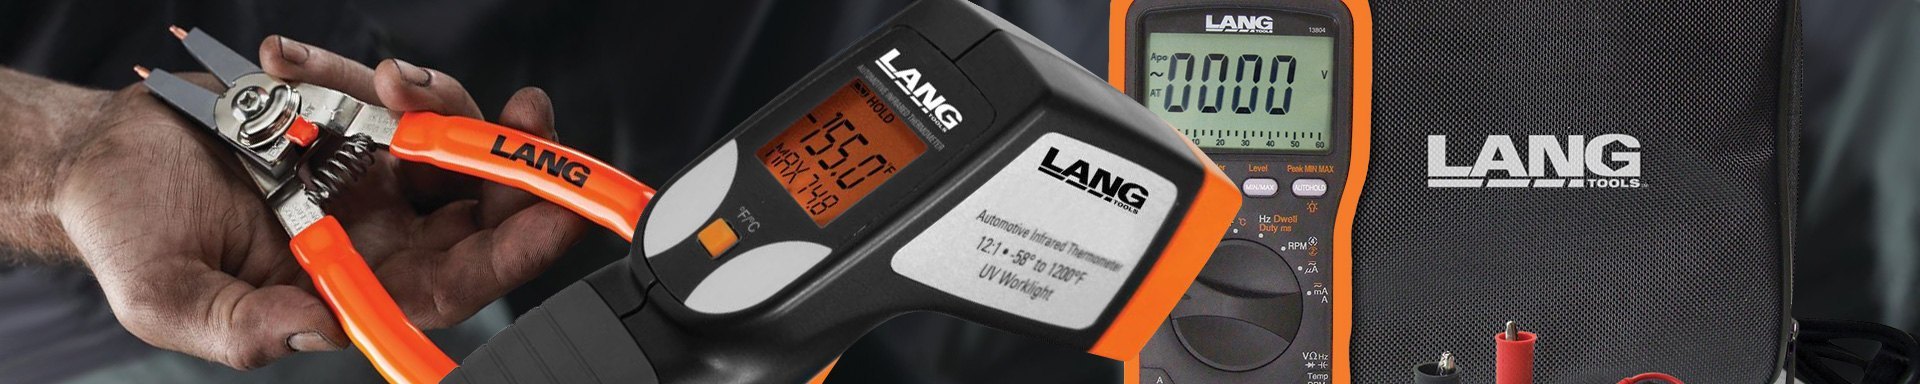 Lang Tools Cooling System Repair Tools